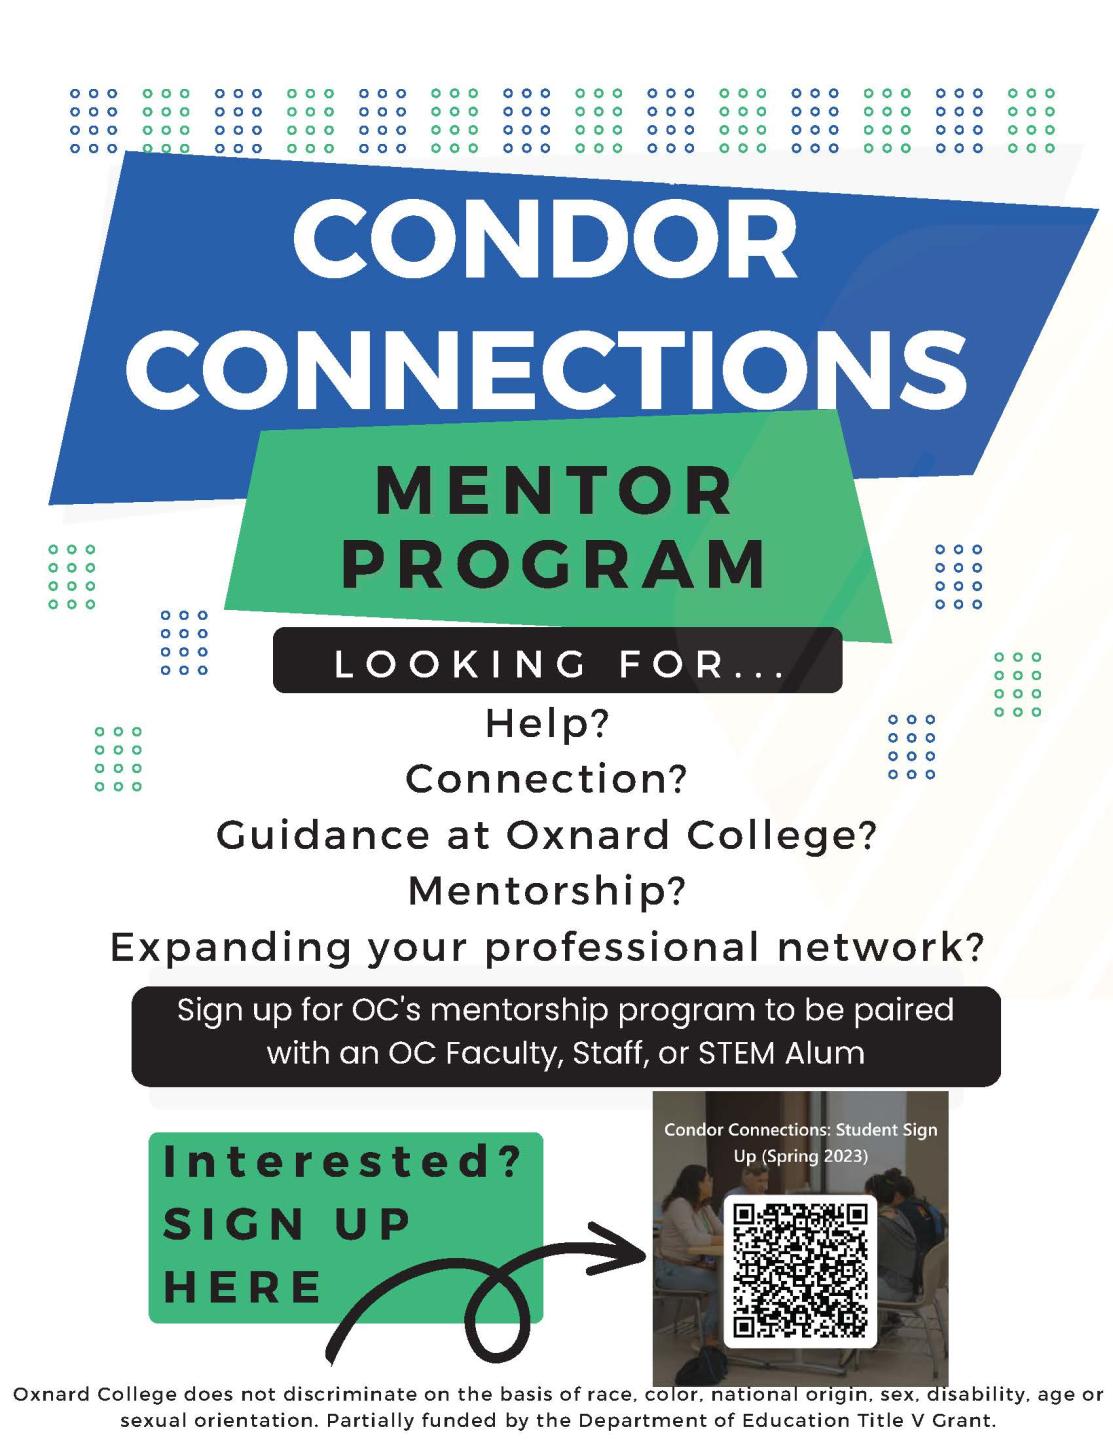 Spring 2023 Condor Connections flyer